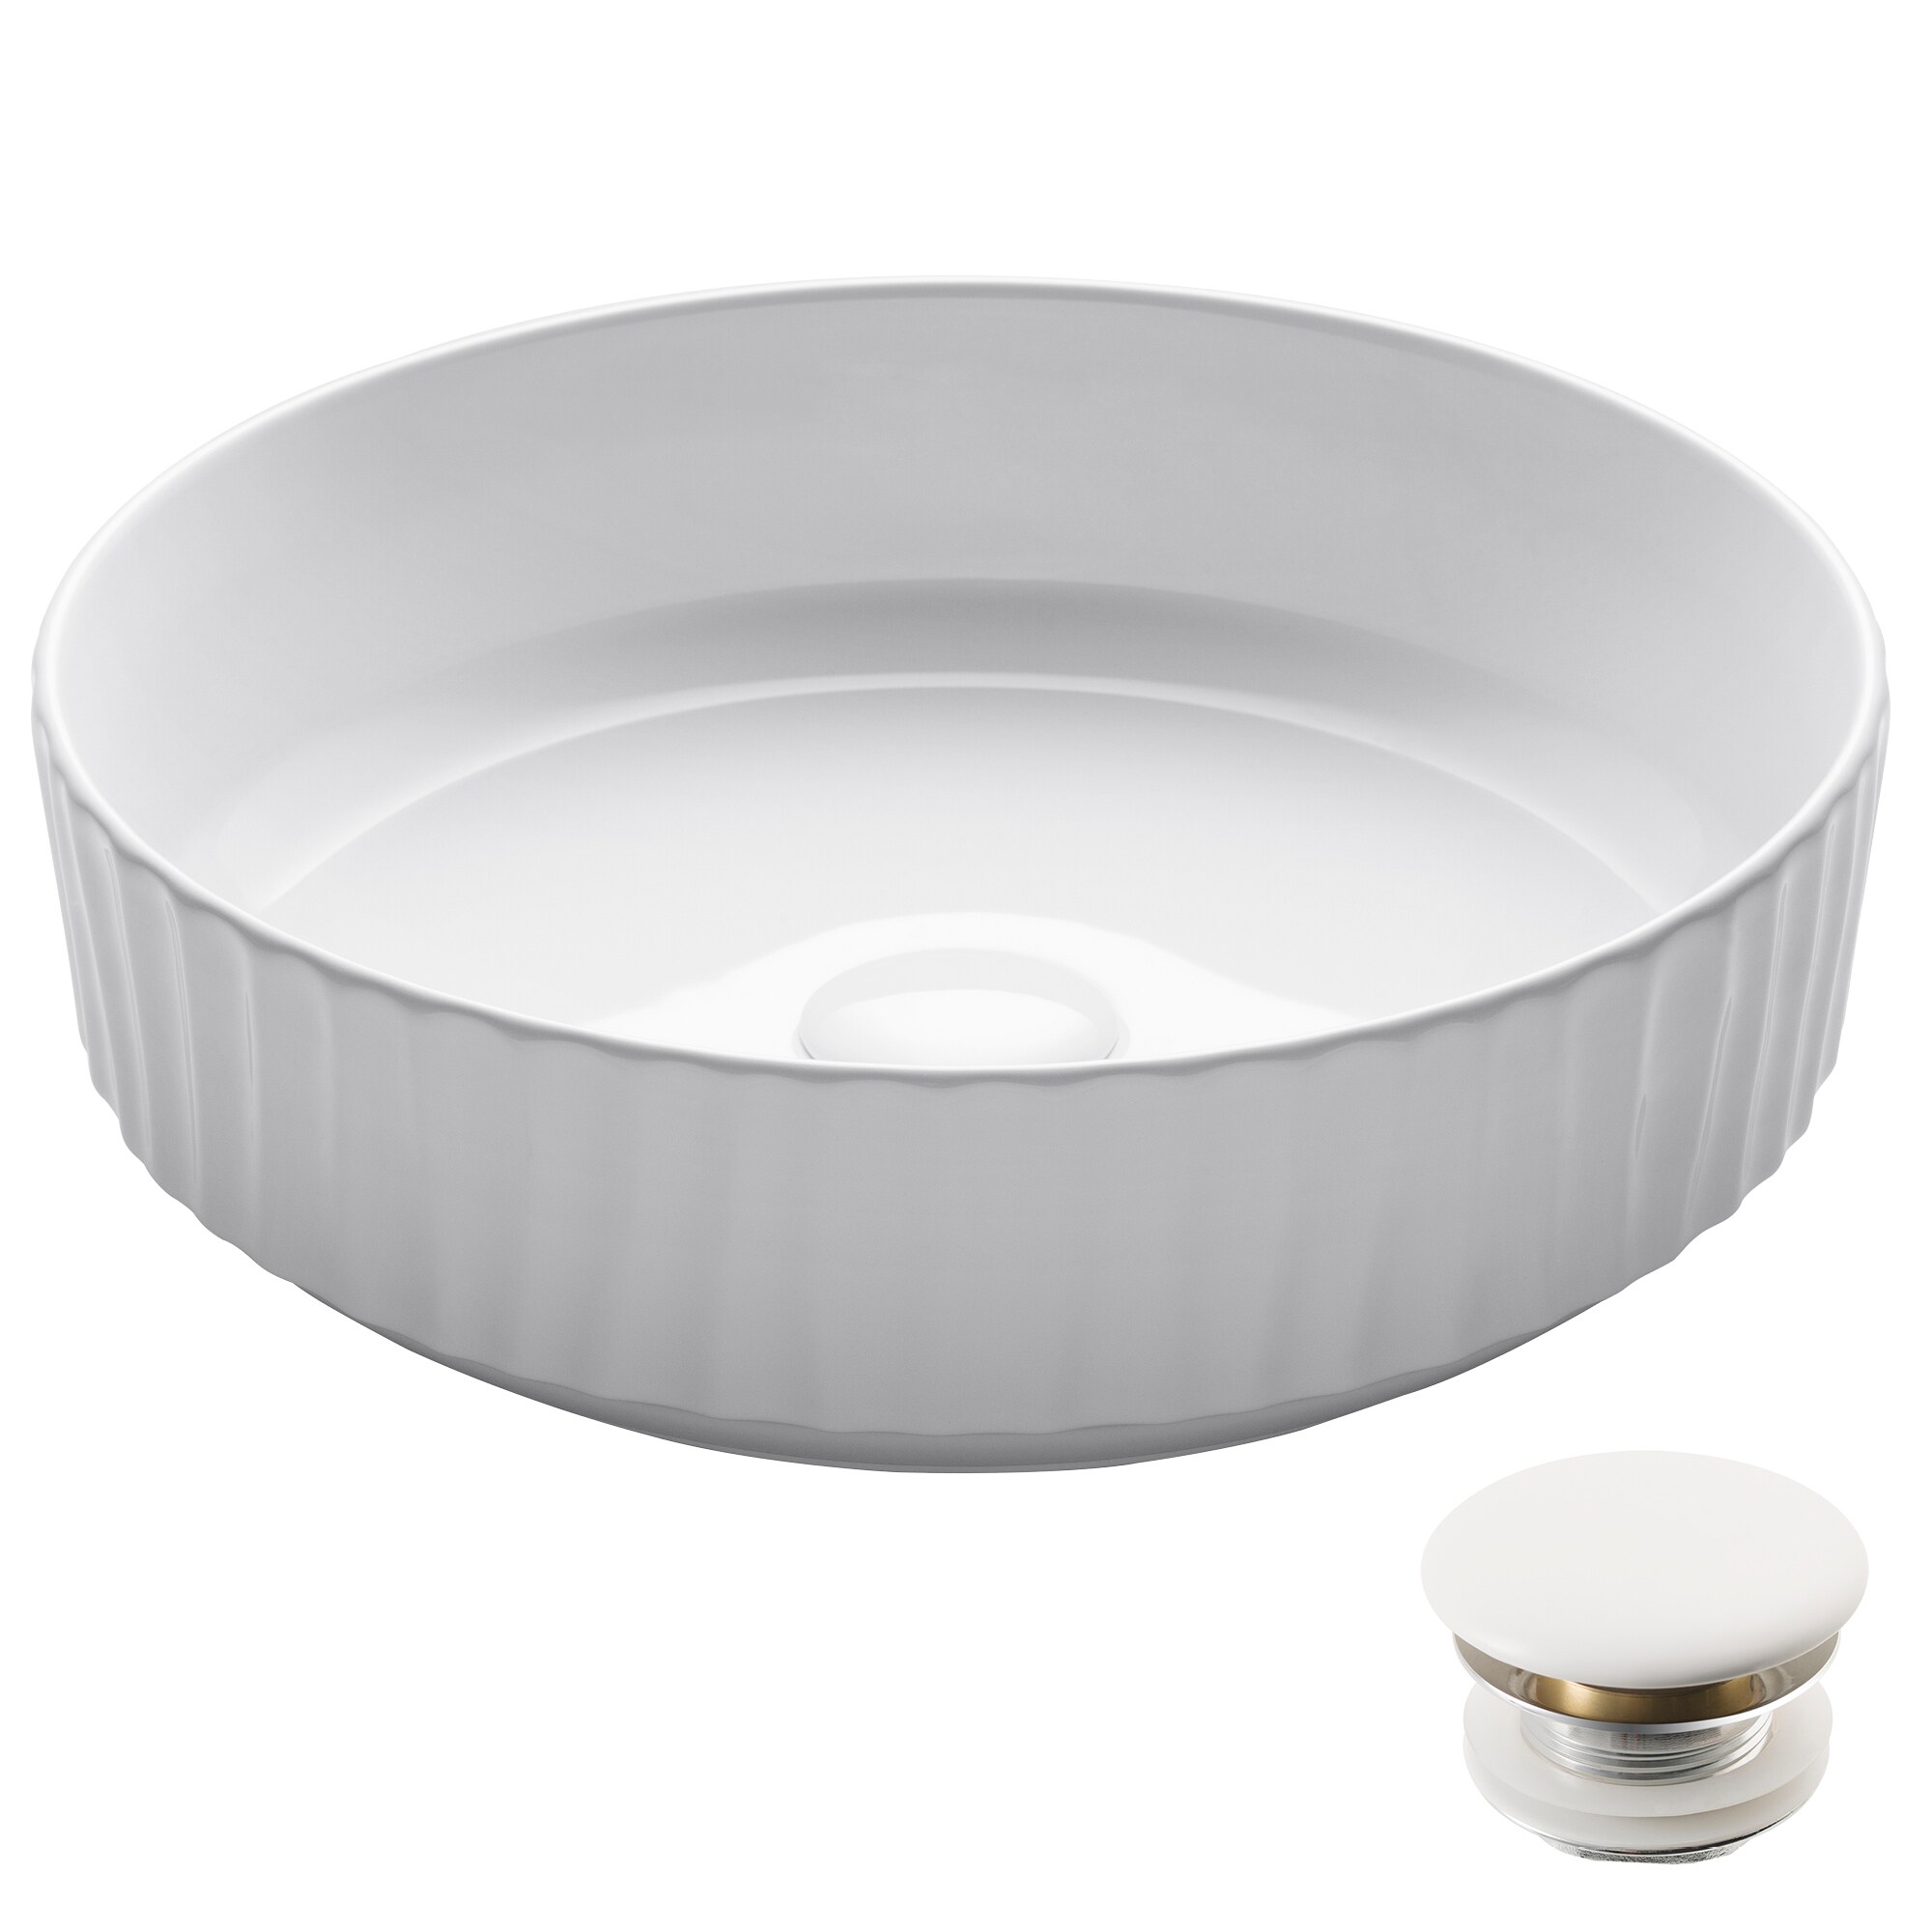 Kraus Viva White Ceramic Vessel Round Modern Bathroom Sink Drain Included (15.75-in x 15.75-in)